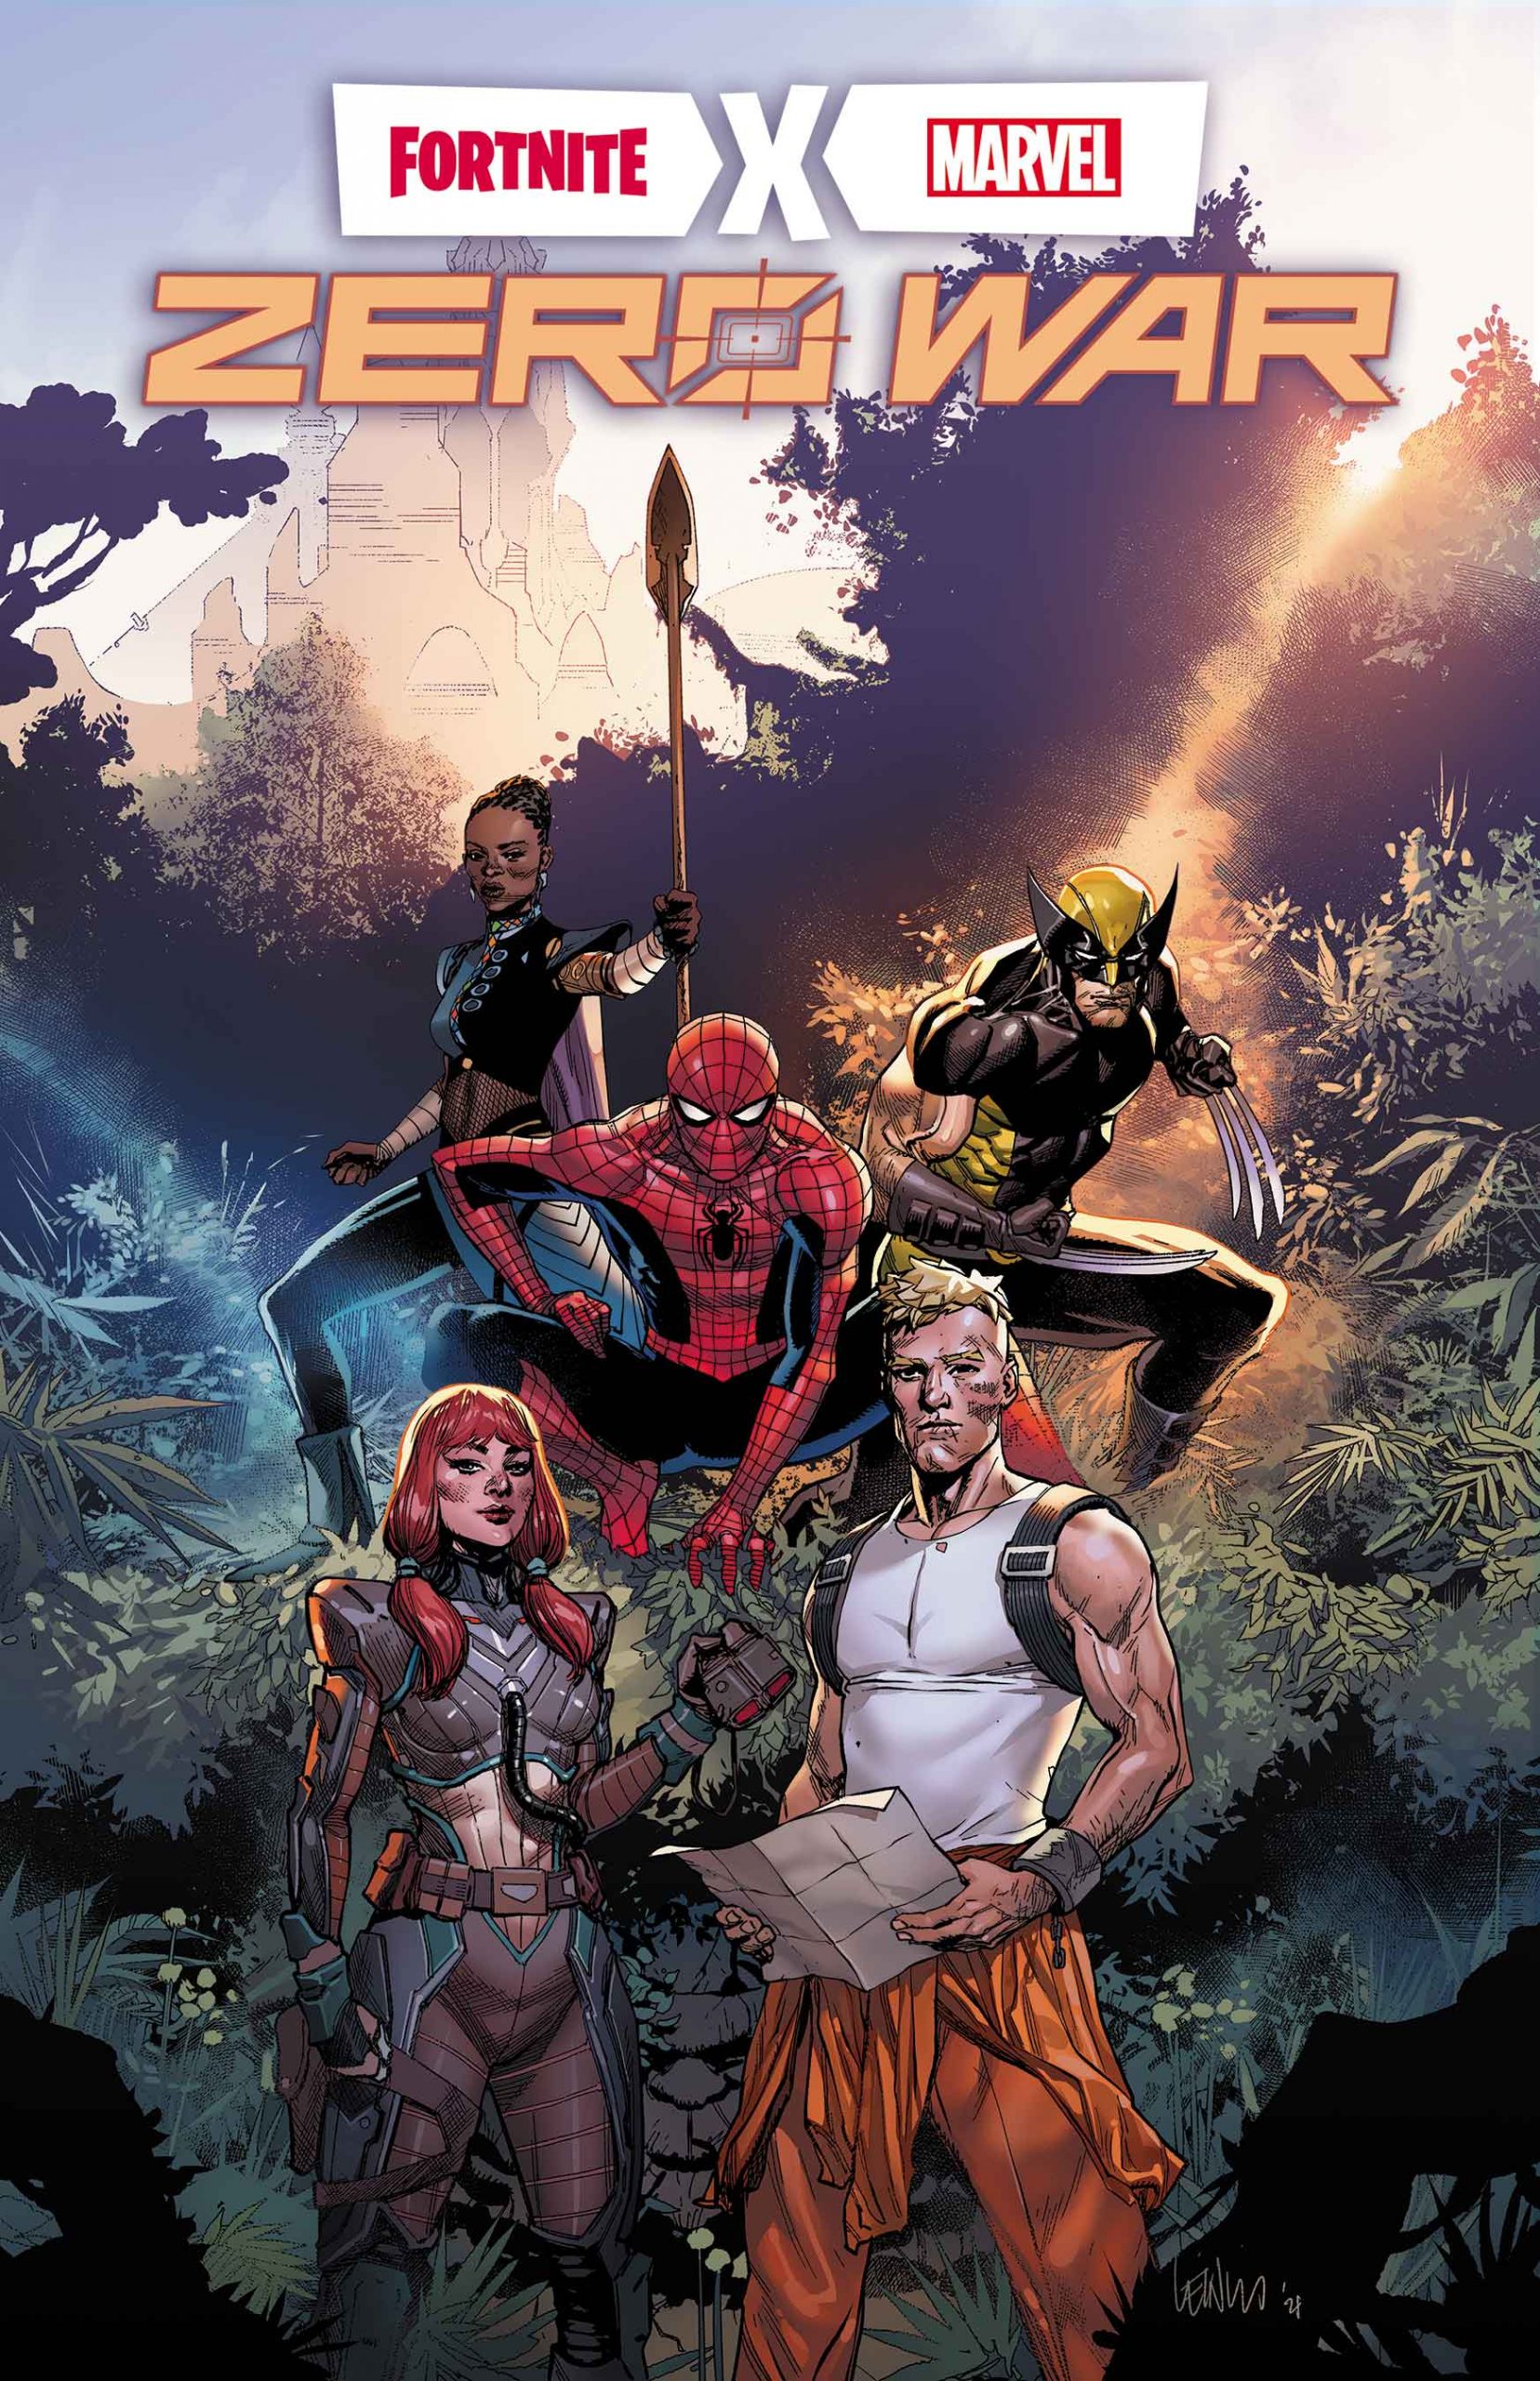 Marvel Preview: Fortnite x Marvel: Zero War #1